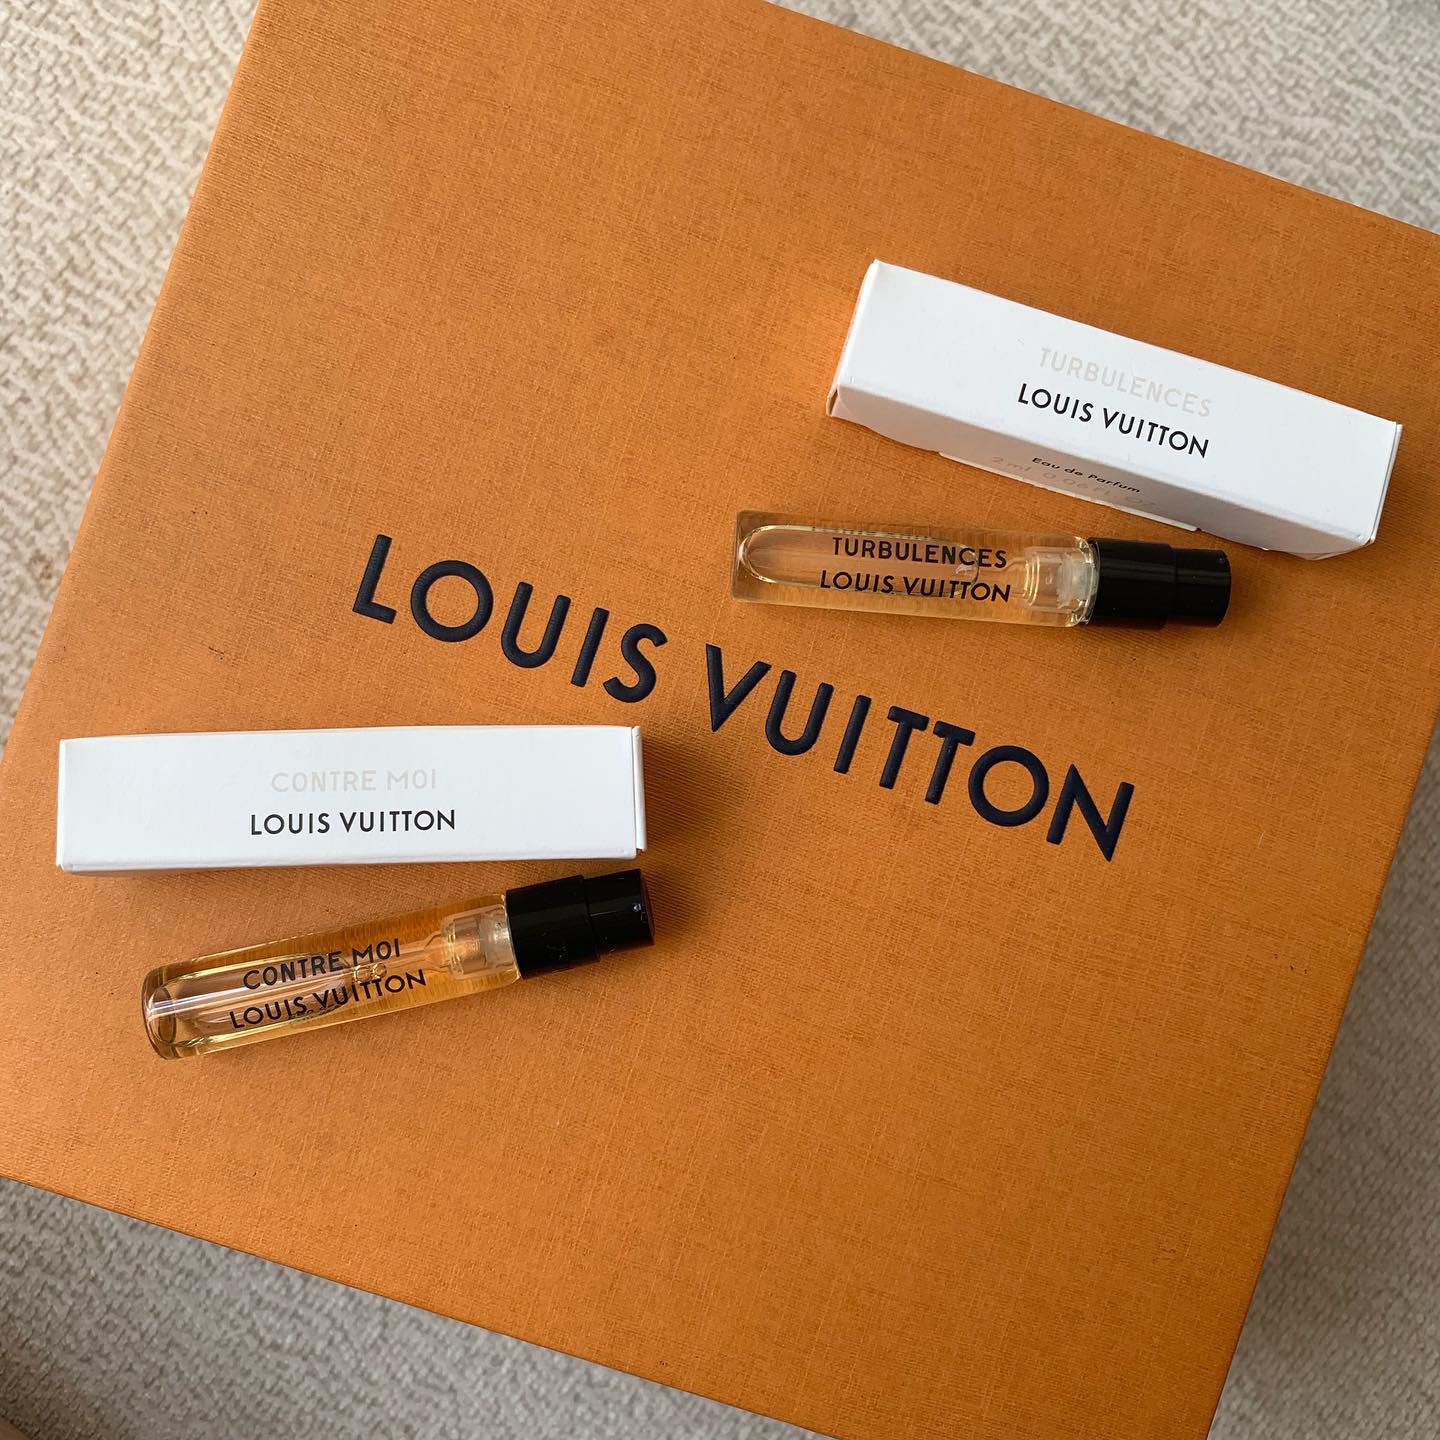 AUTHENTIC LV LOUIS VUITTON Perfume Samples - 2 ml, Beauty